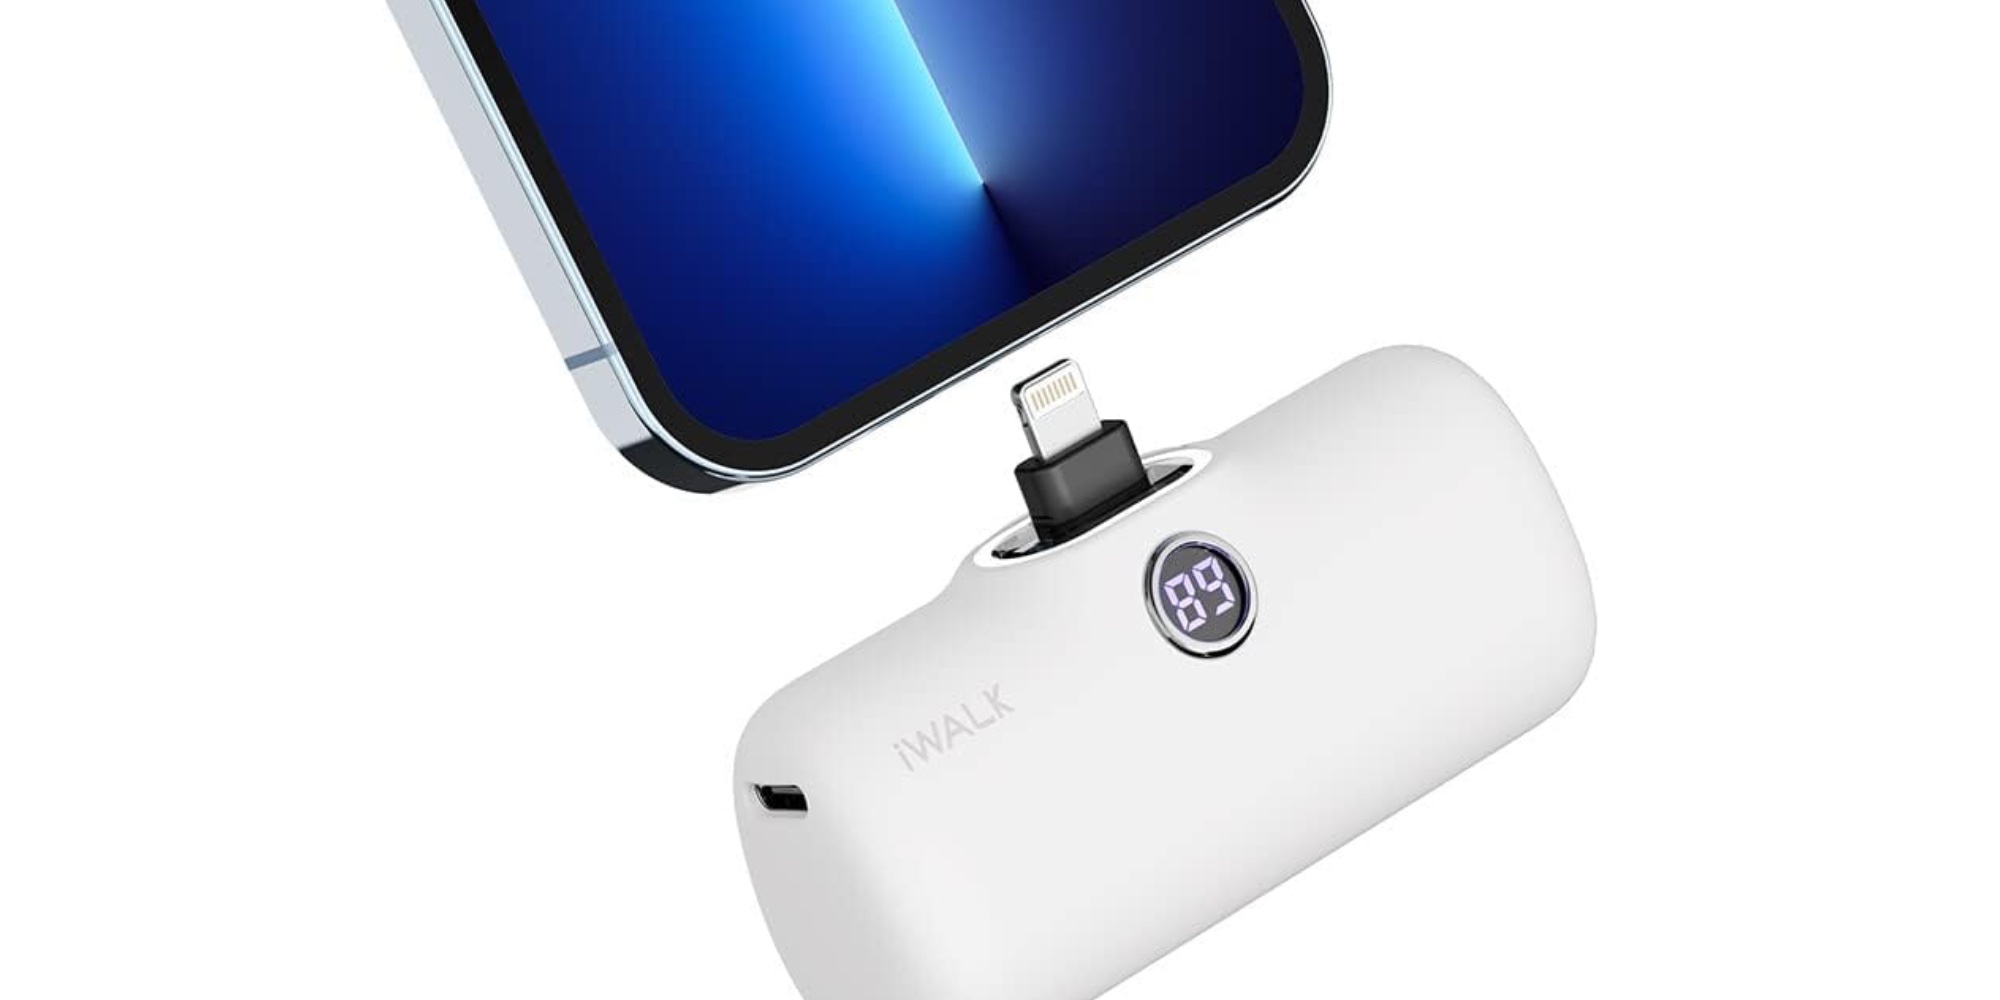 Smartphone Accessories: iWALK LinkPod Lightning Power Bank $28